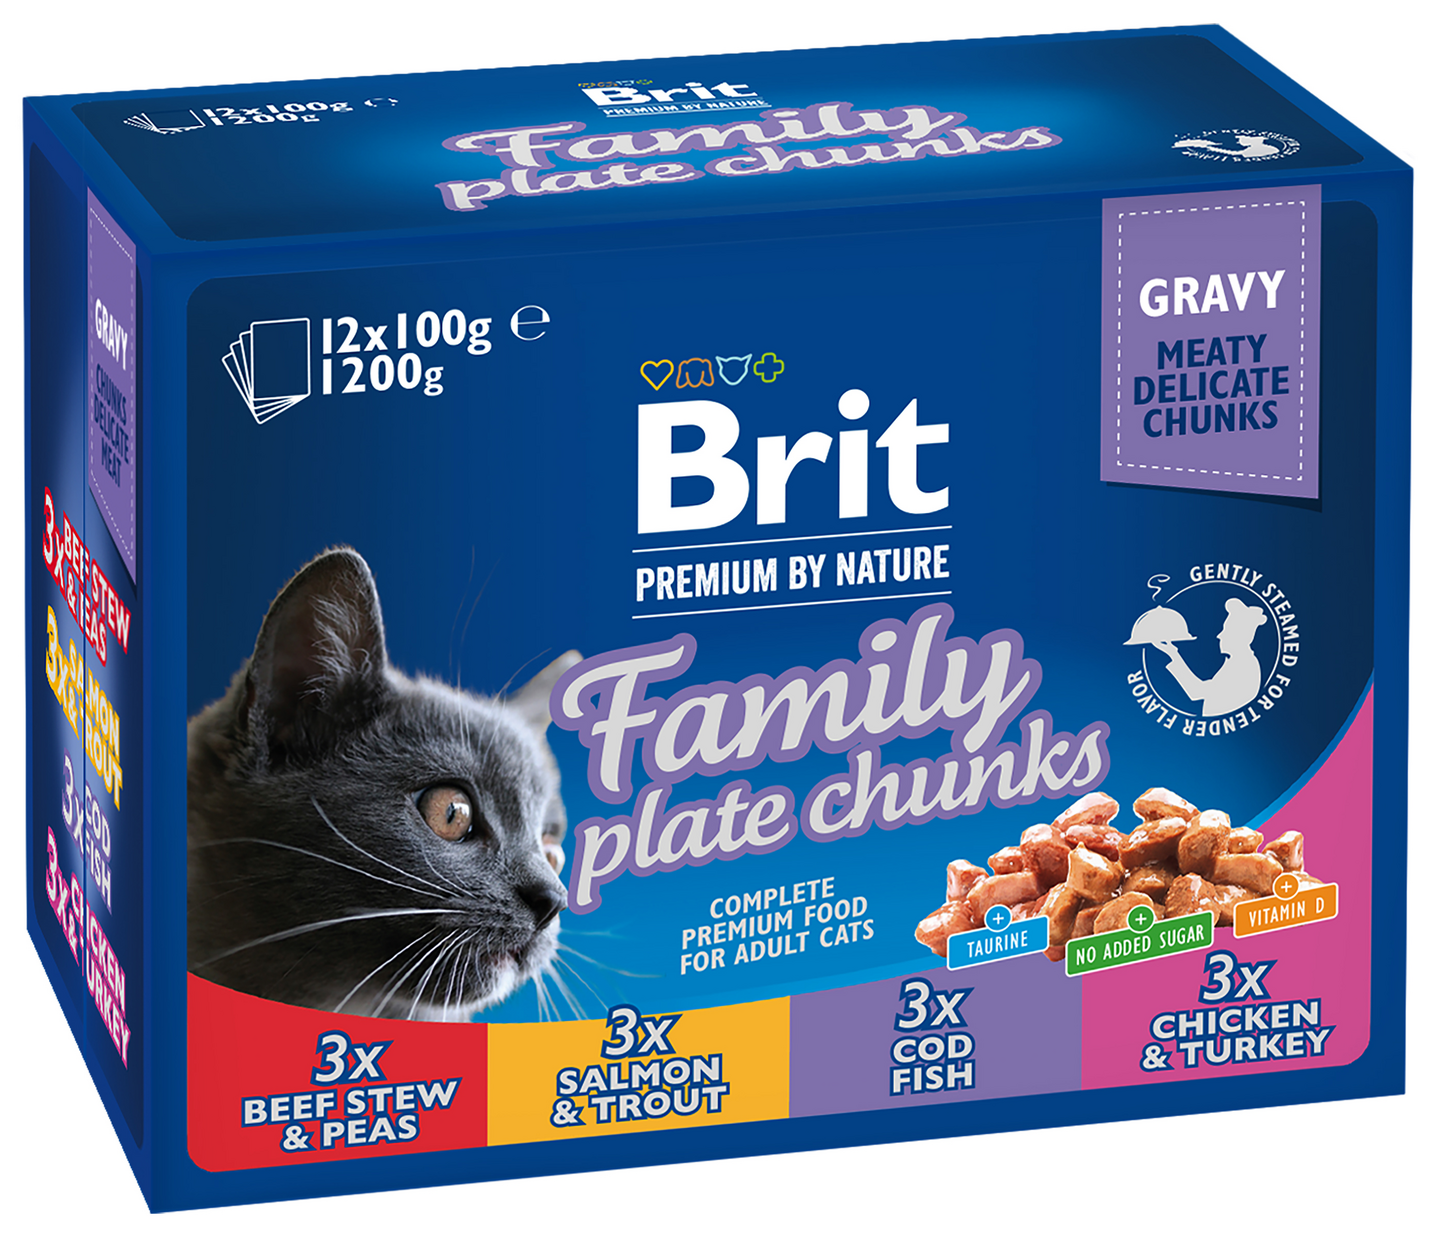 Brit Premium Cat Paloja kastikke liha-kala Family plate lajitelma 12x100g